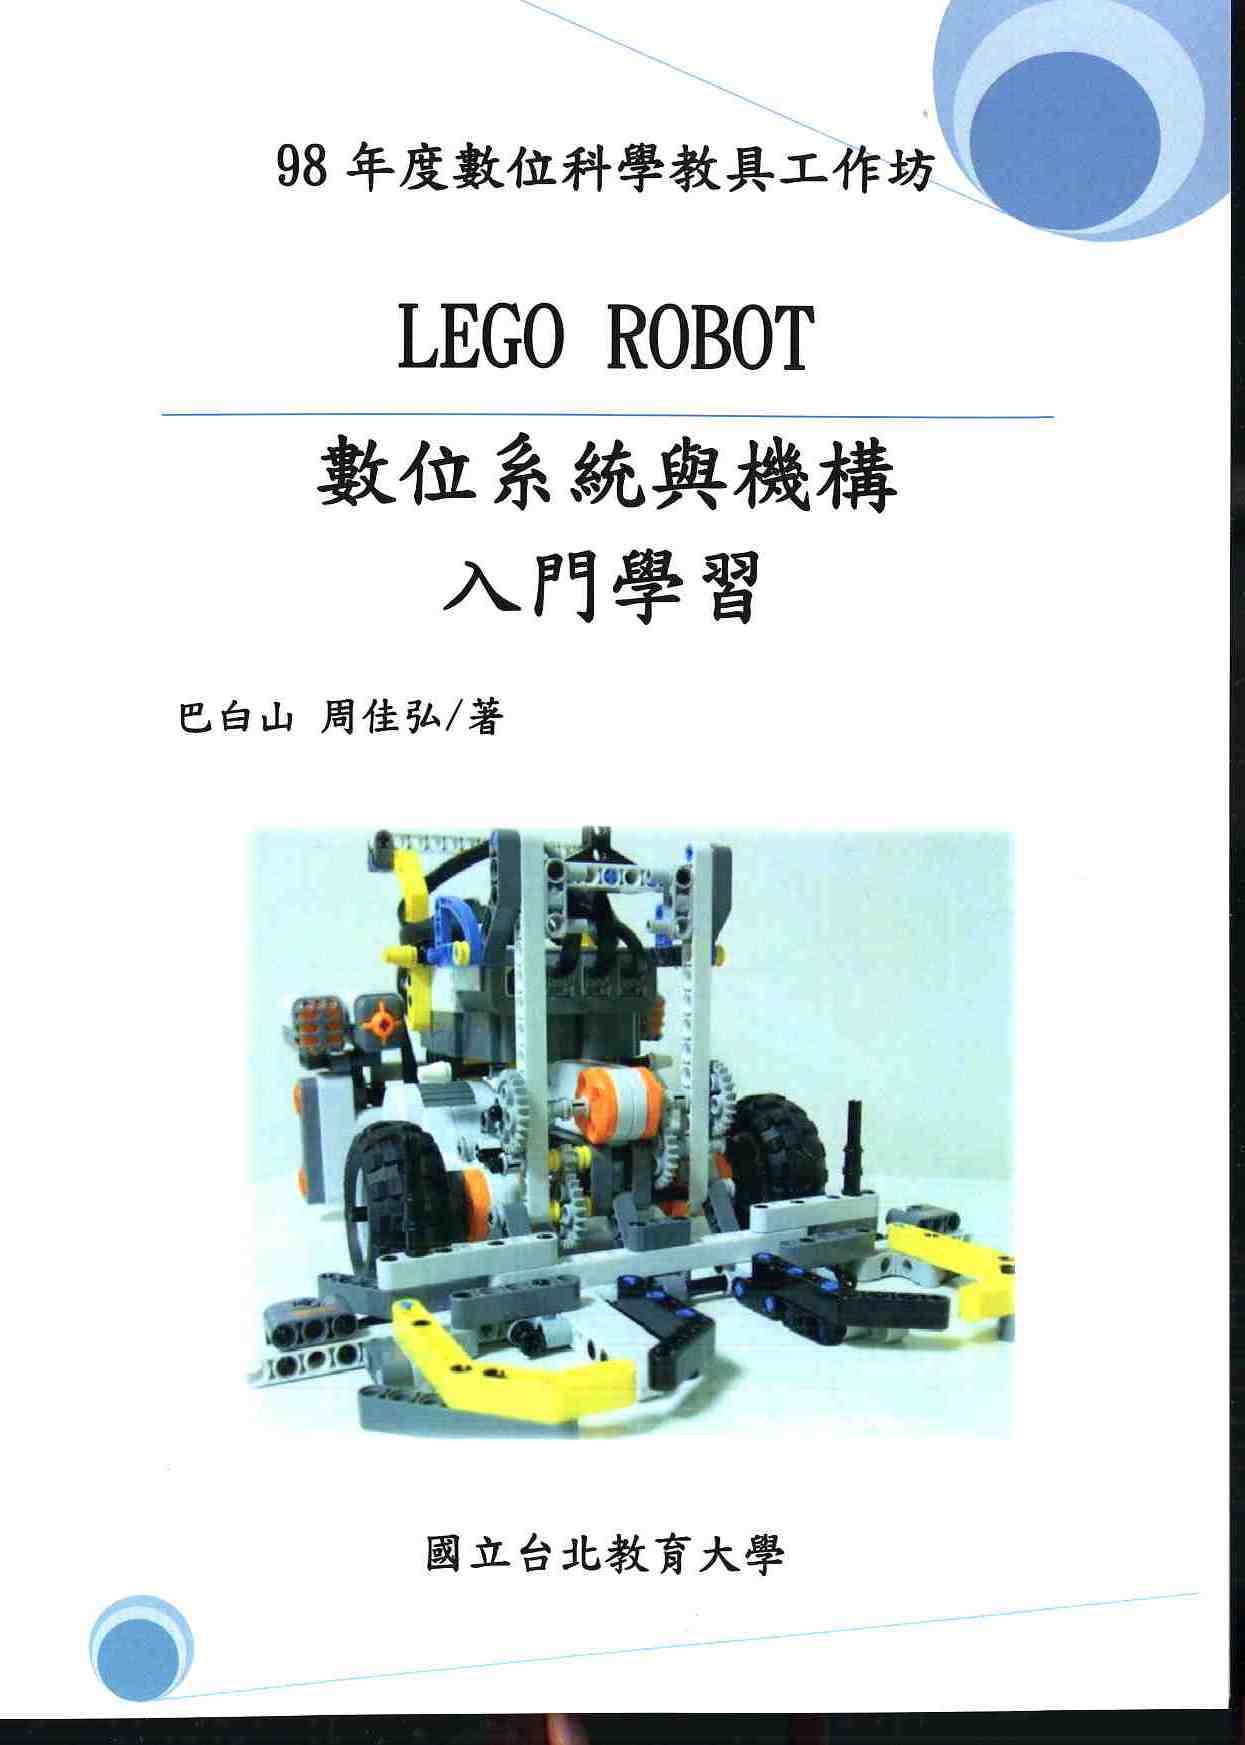 LEGO ROBOT數位系統與機構入門學習